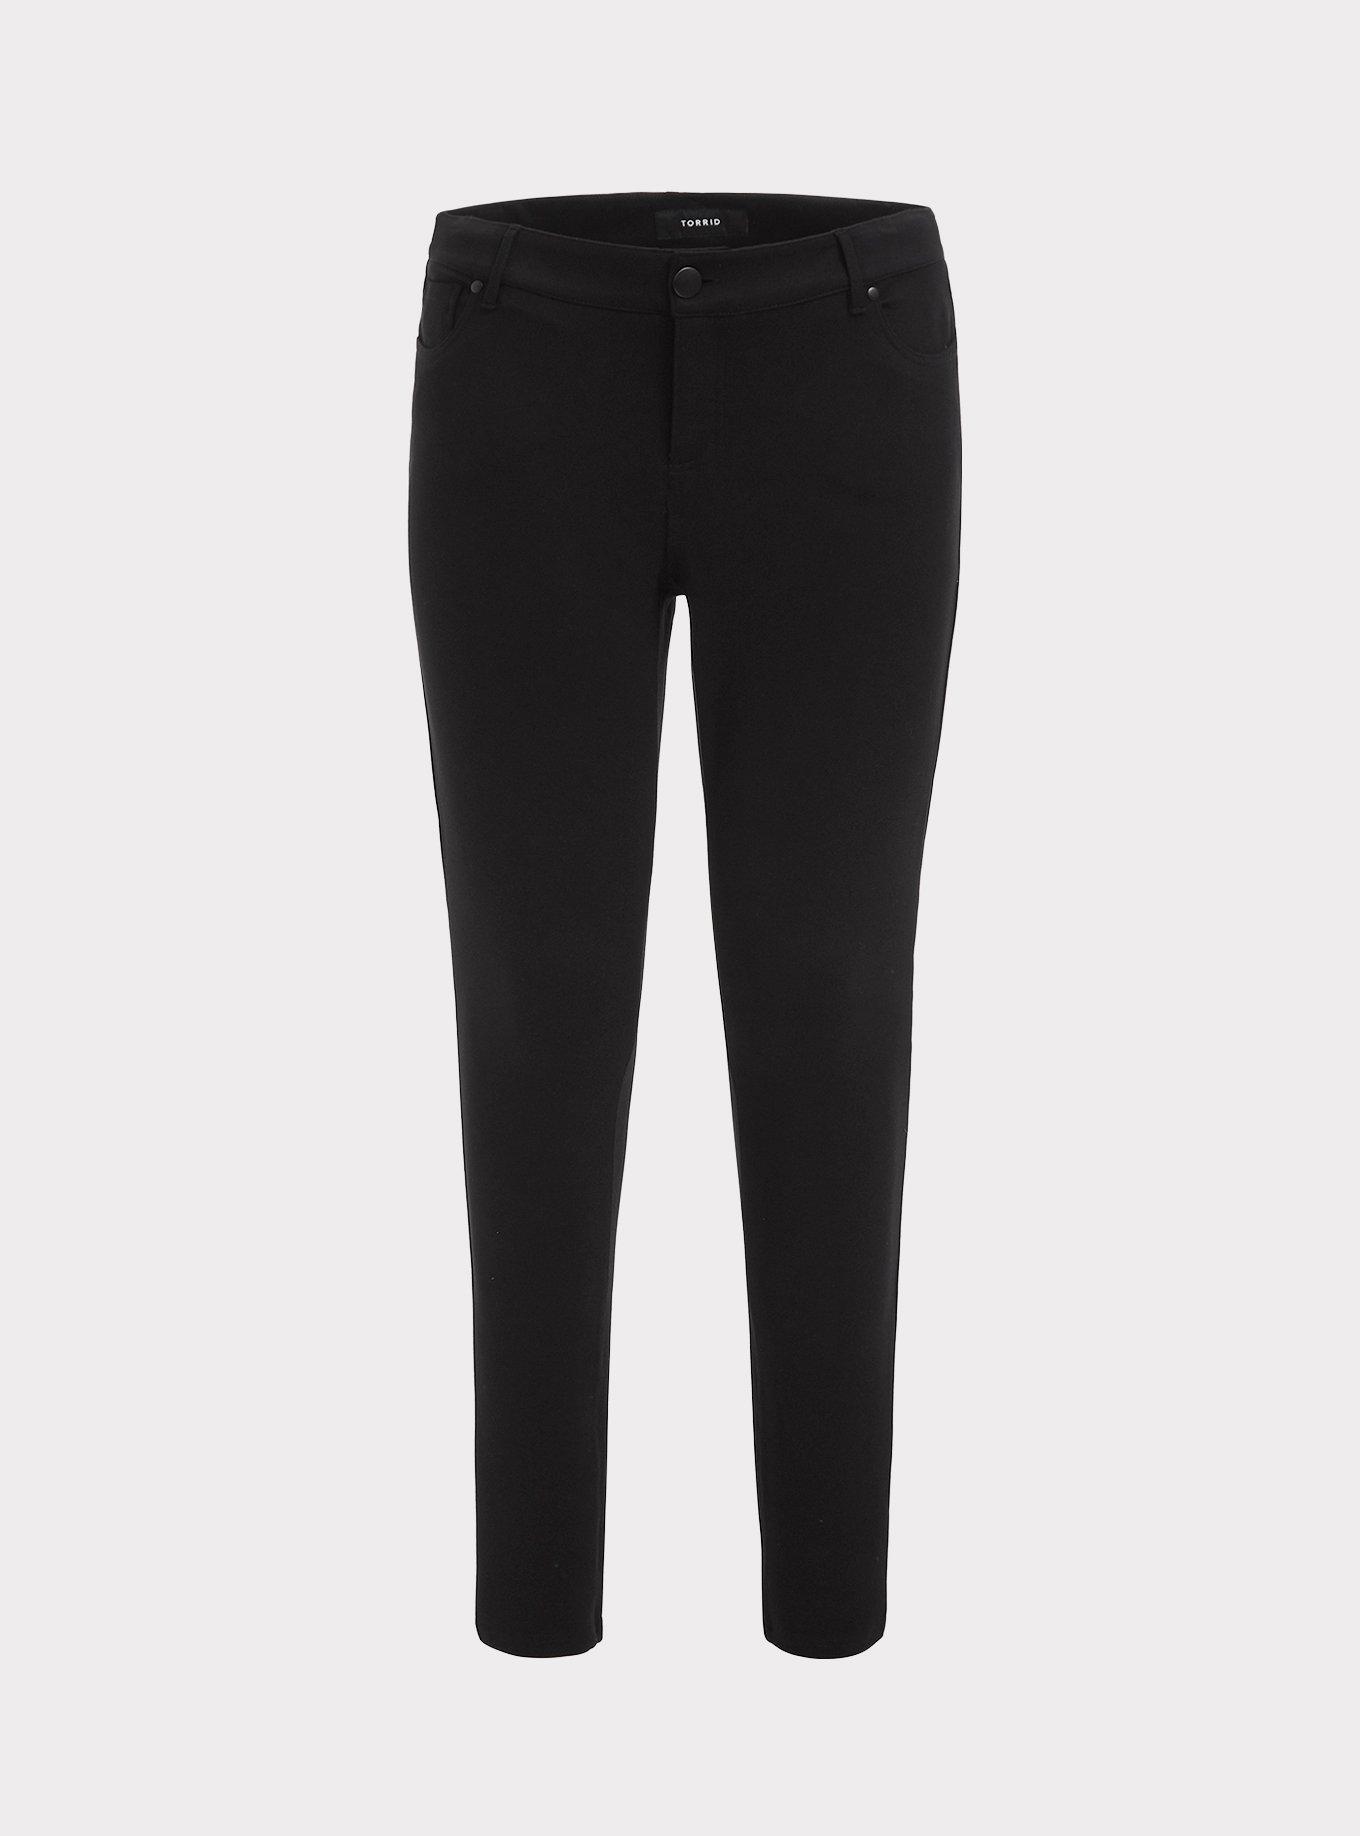 Studio Curve Ponte Zip Slim Leg Pant, Black - Jeans, Pants & Shorts